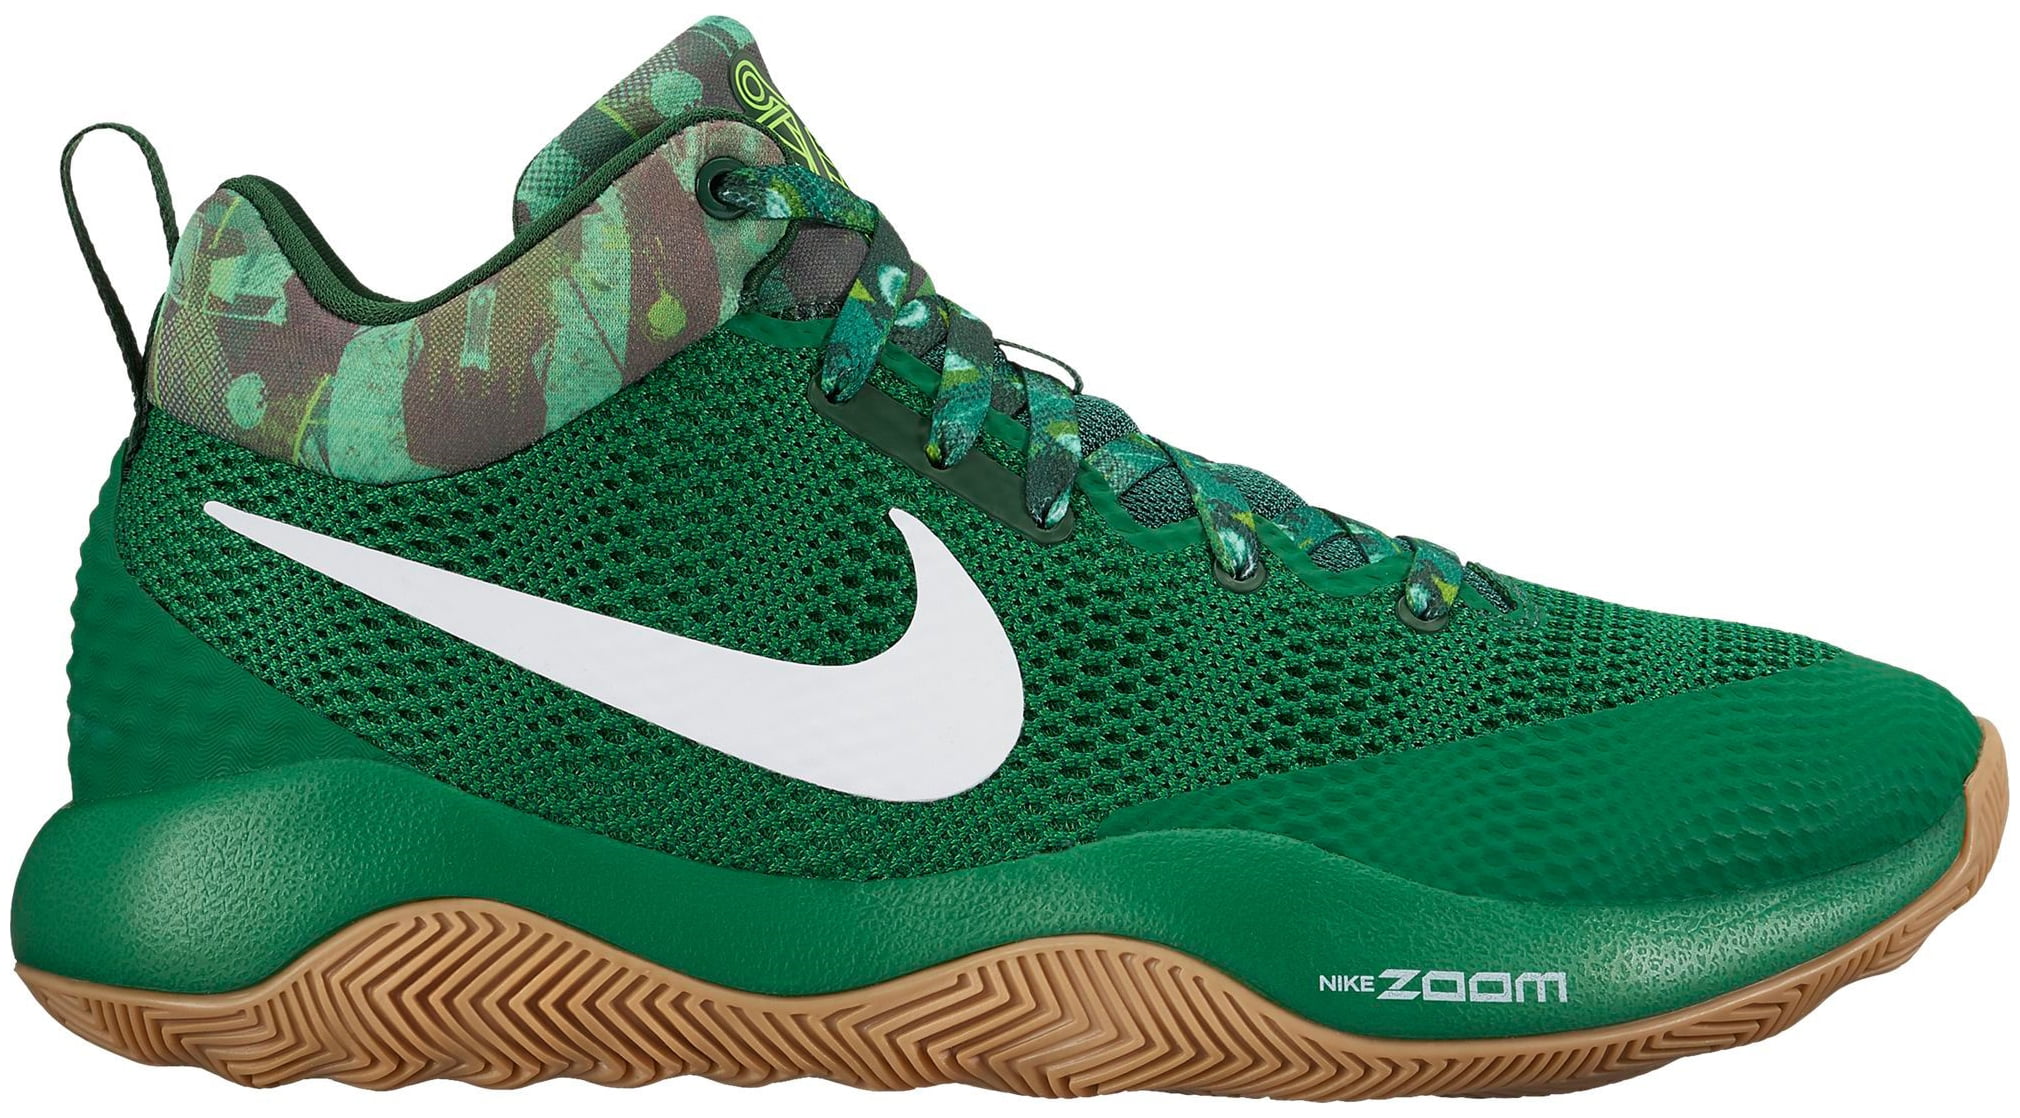 Nike Men's Zoom 2017 Shoes - Green/White 10.5 - Walmart.com